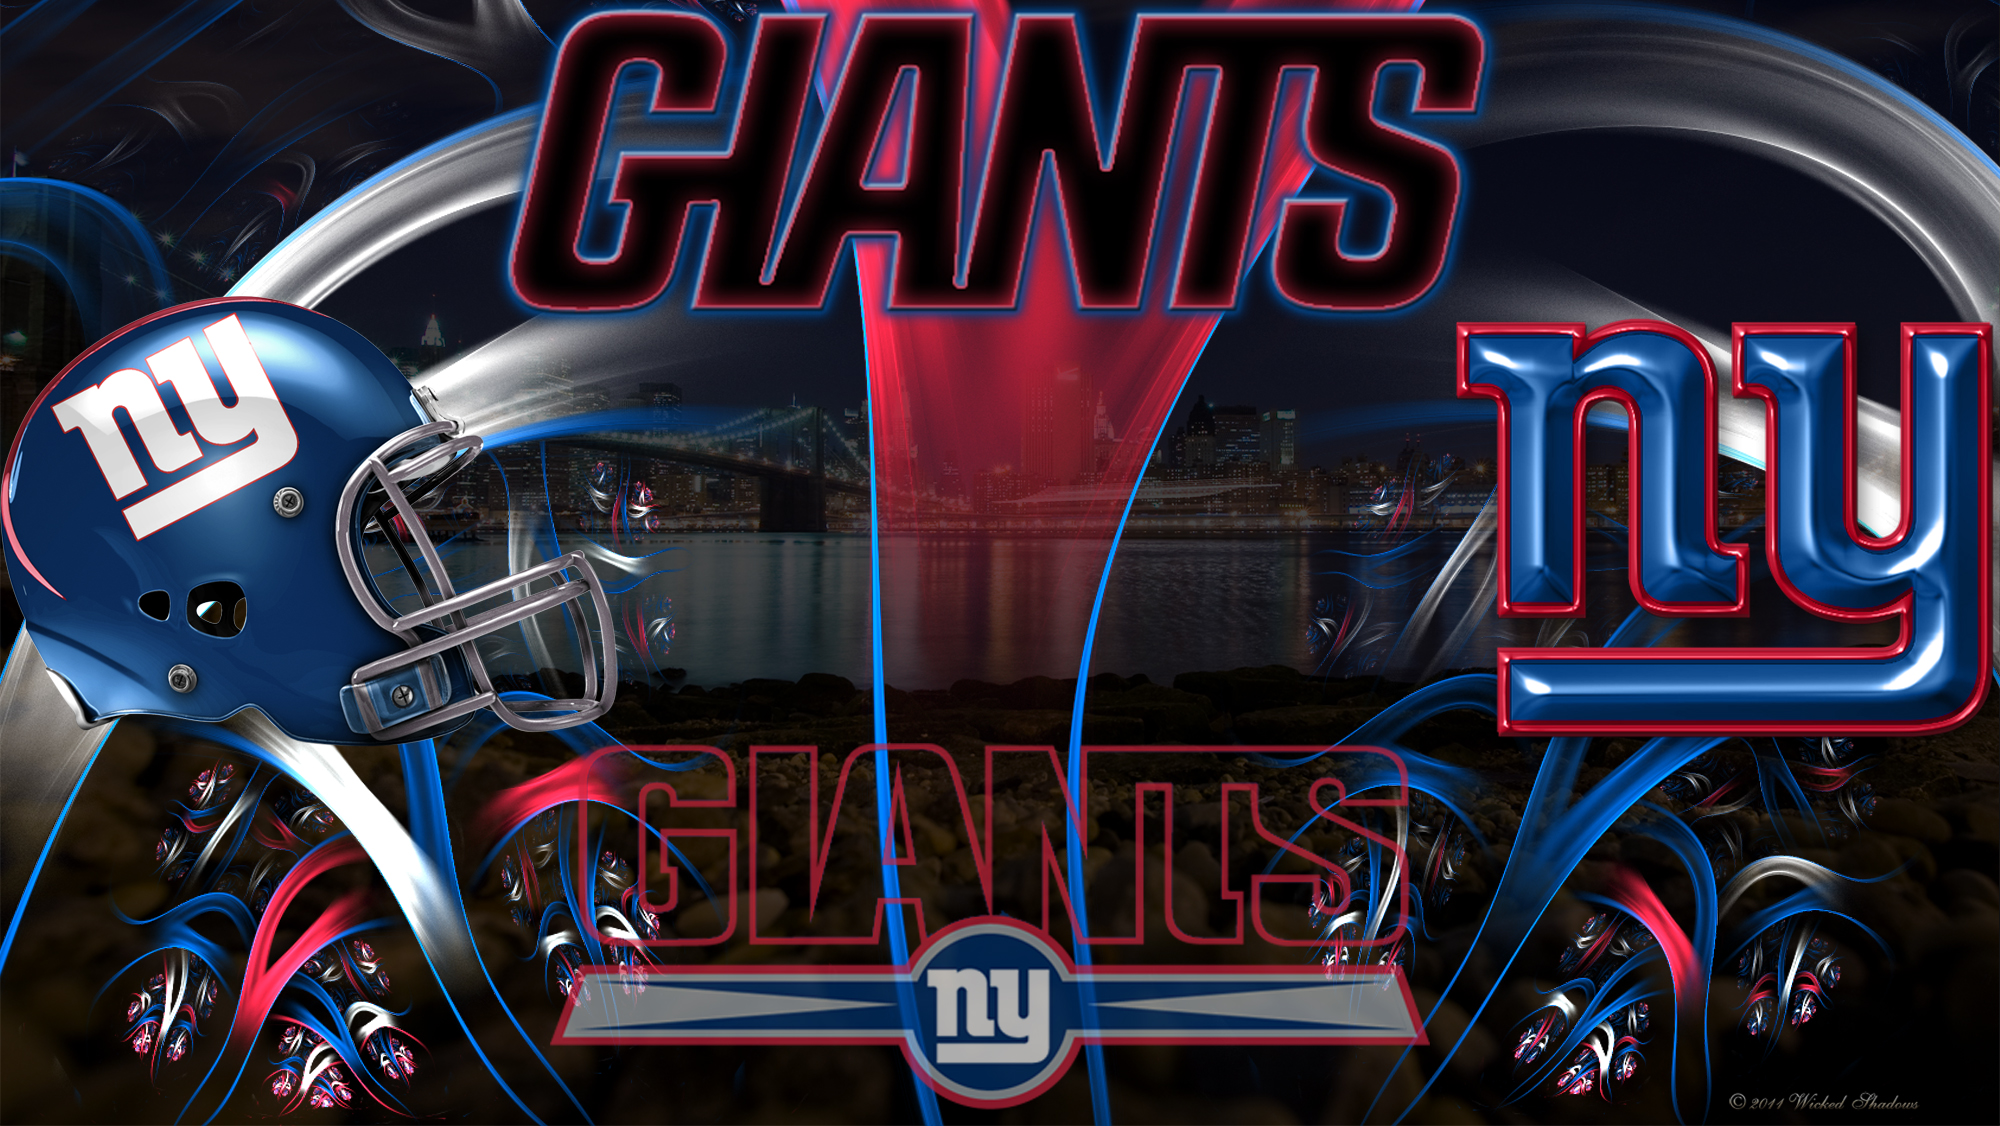 New York Giants Nfl Football R Wallpaper Background